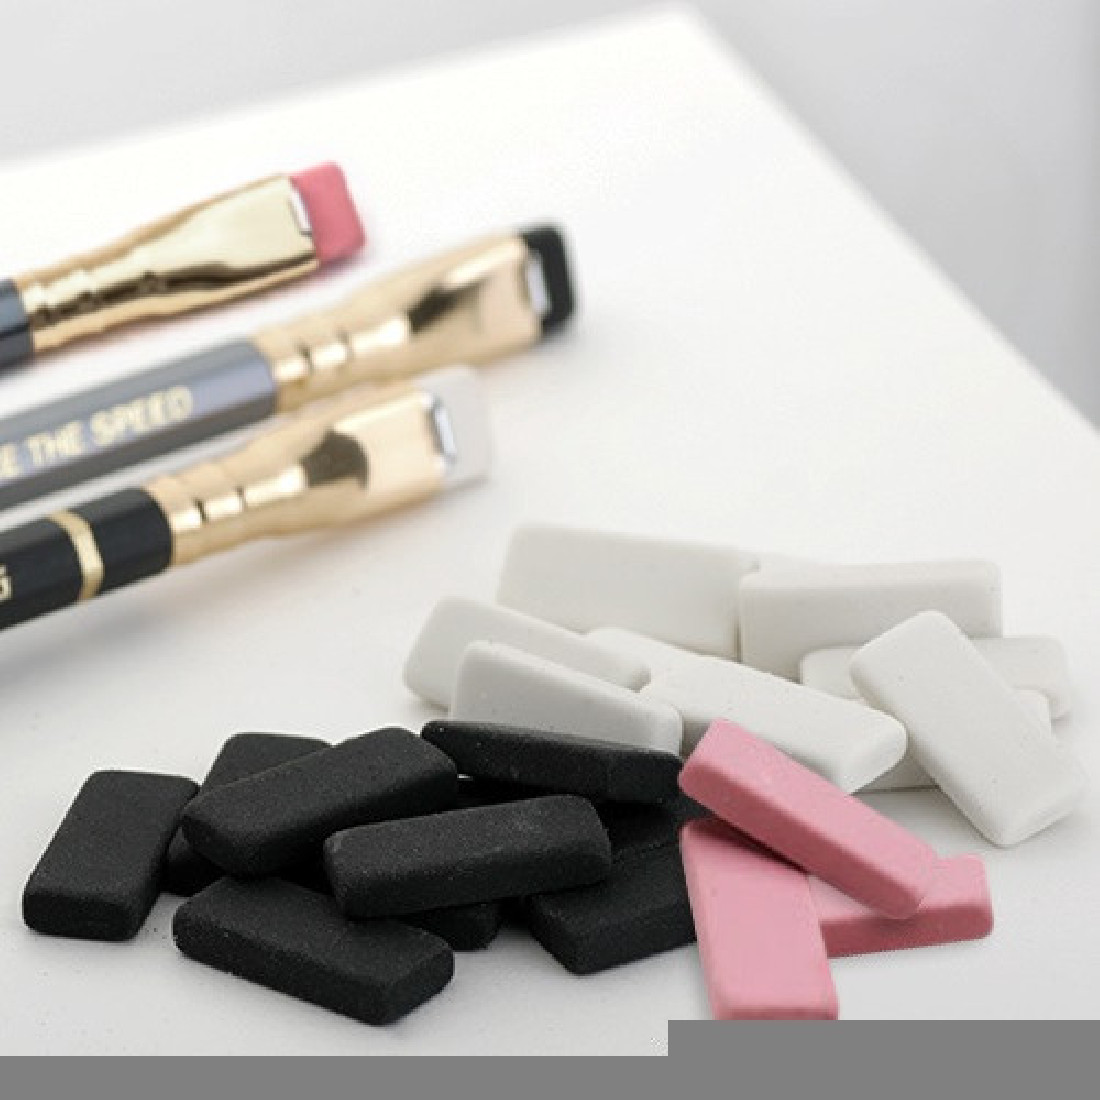 Palomino Blackwing replacement white erasers